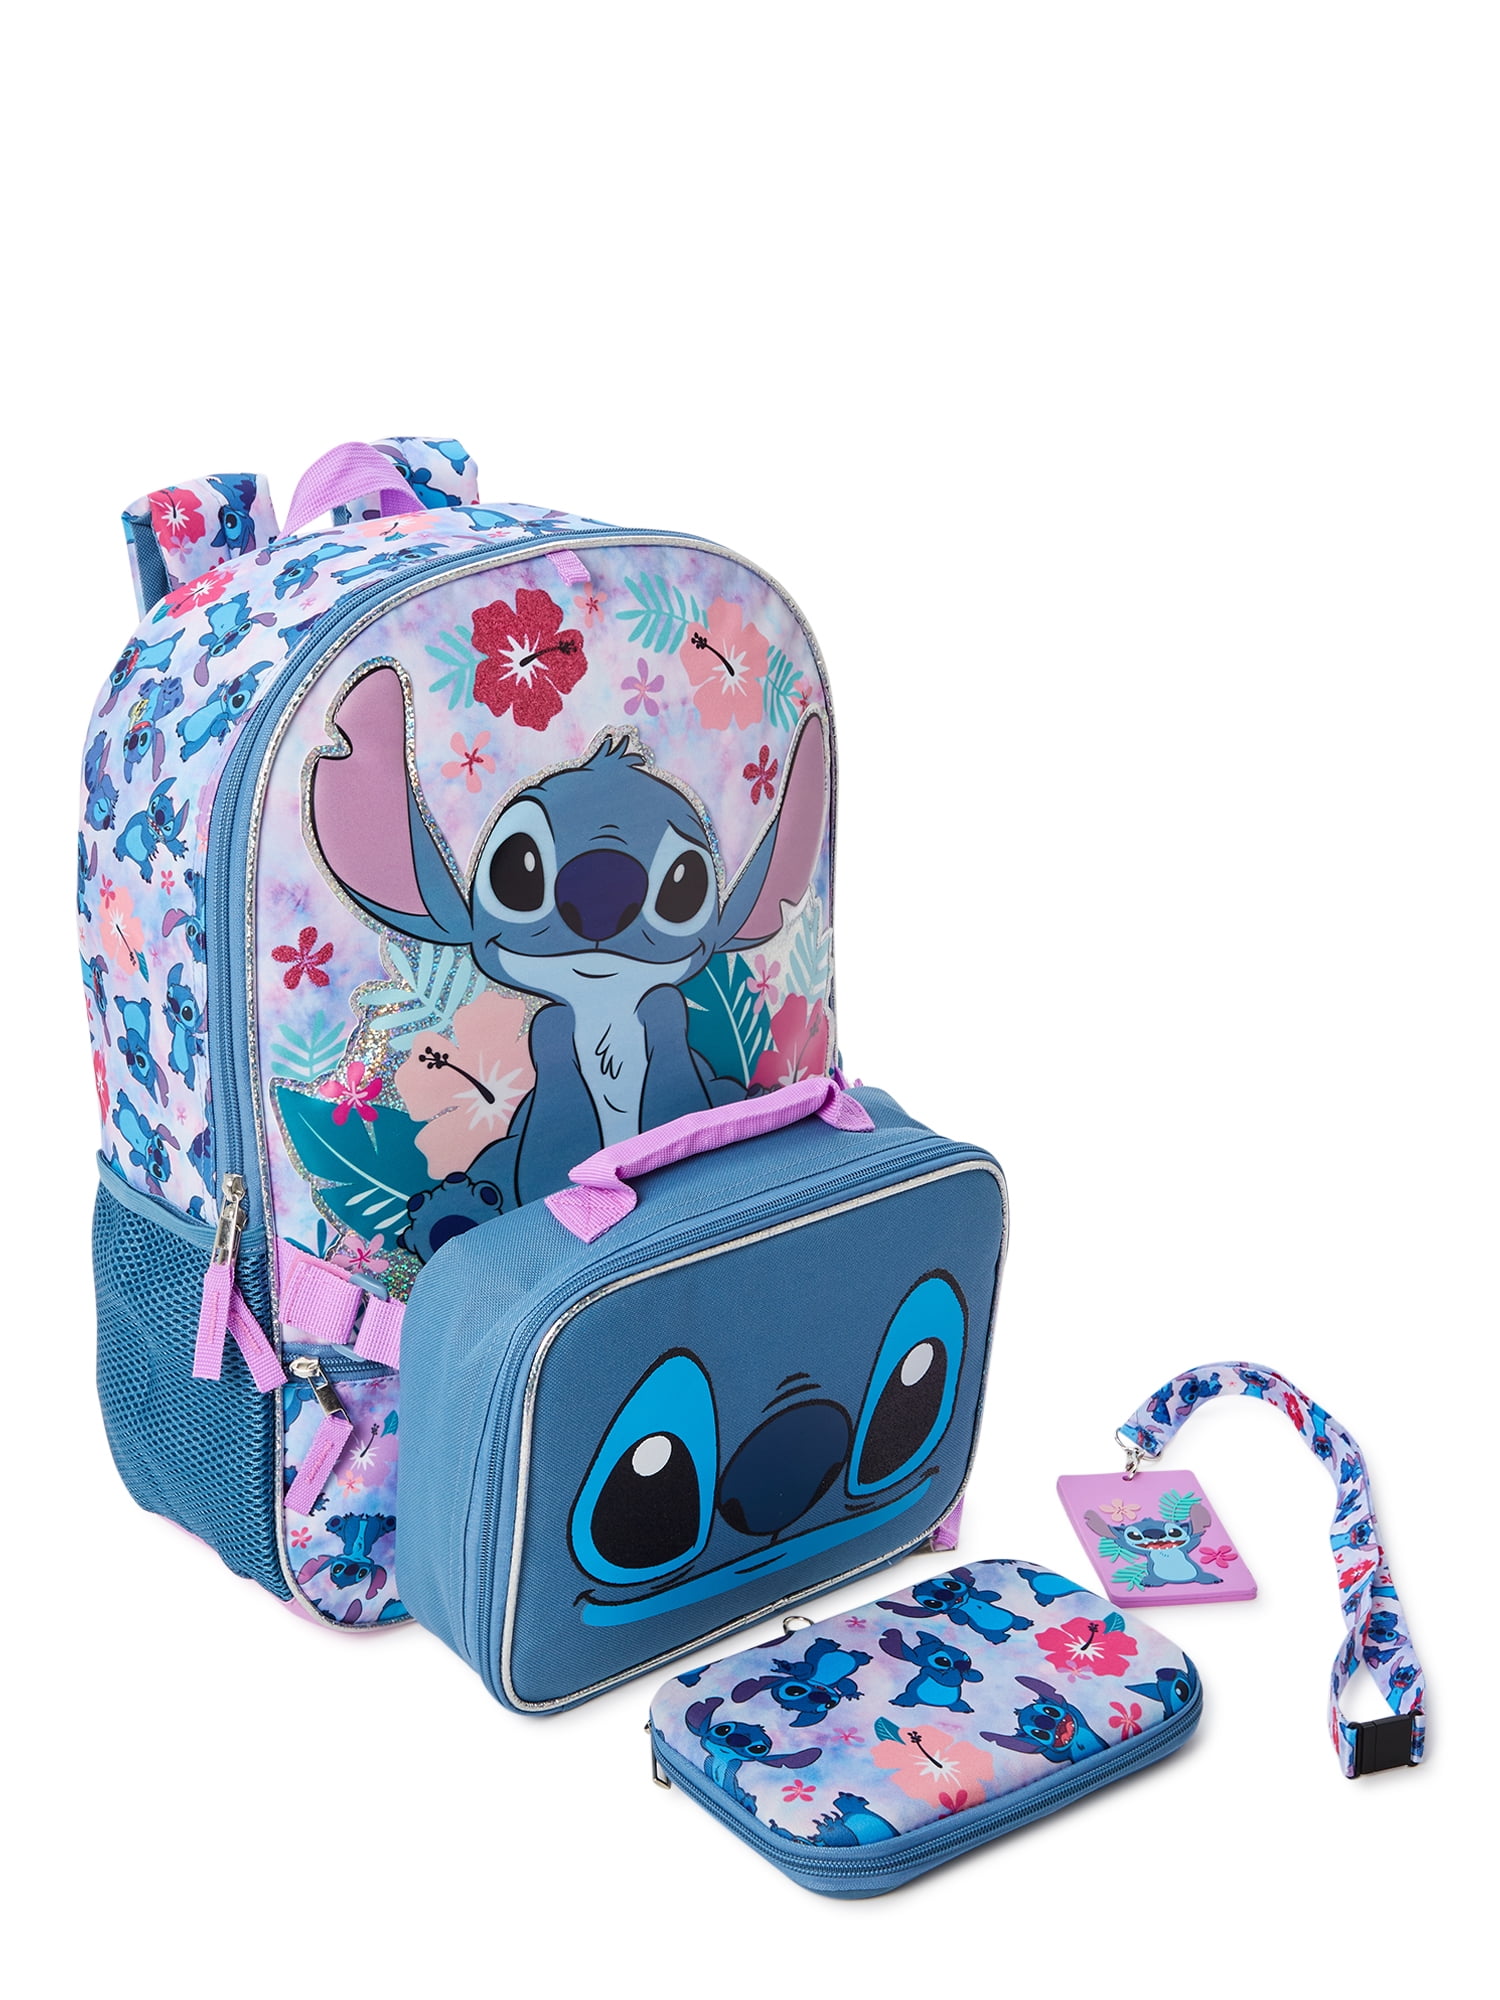 Disney Lilo & Stitch Kids’ Weird but Cute with Lunch Bag 4-Piece Set Blue